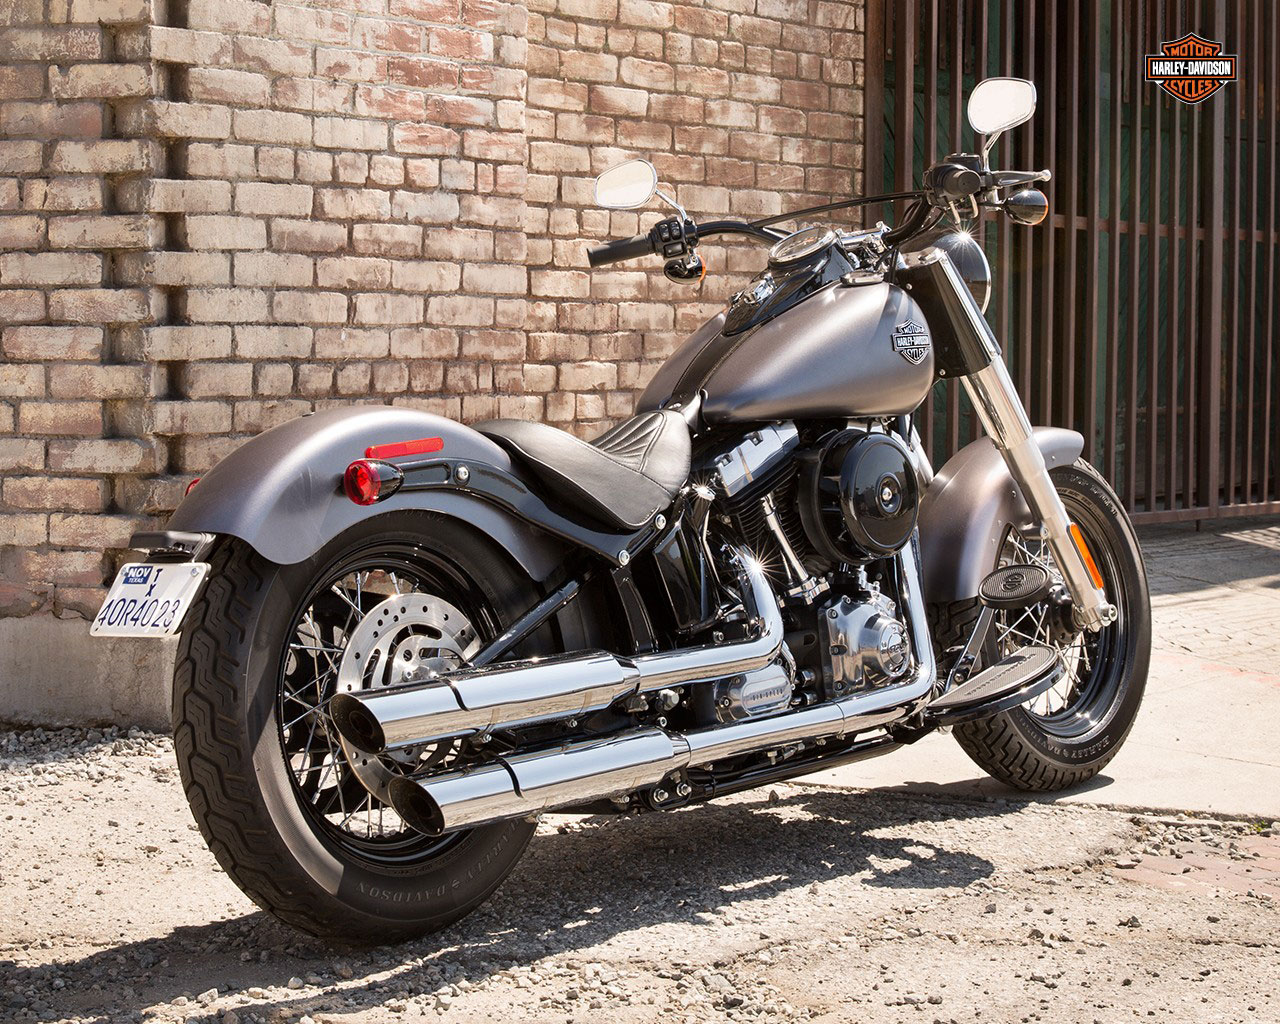 2015 Harley Davidson Fls Softail Slim Review